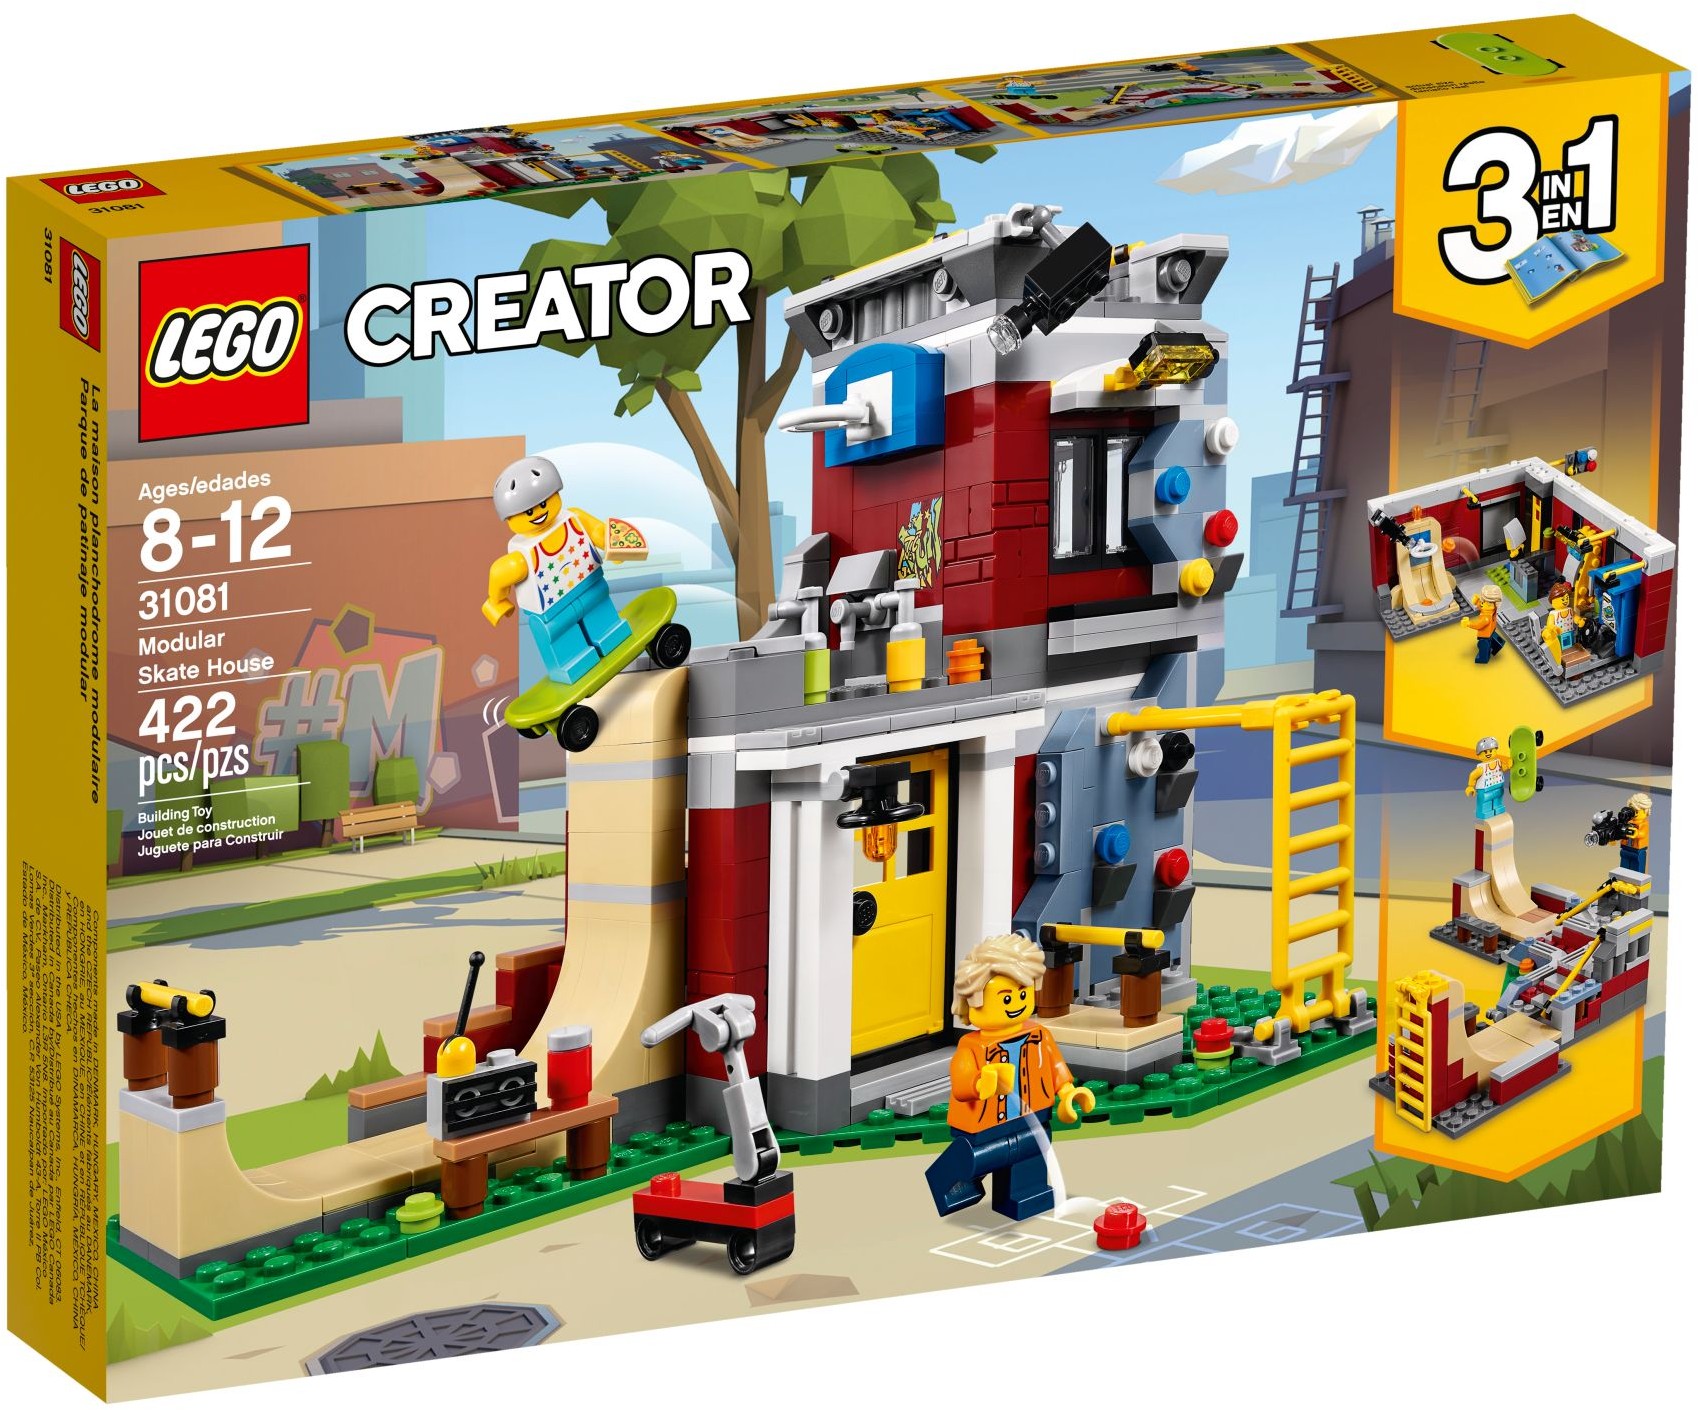 31081 LEGO Creator 3in1 Modular Skate House